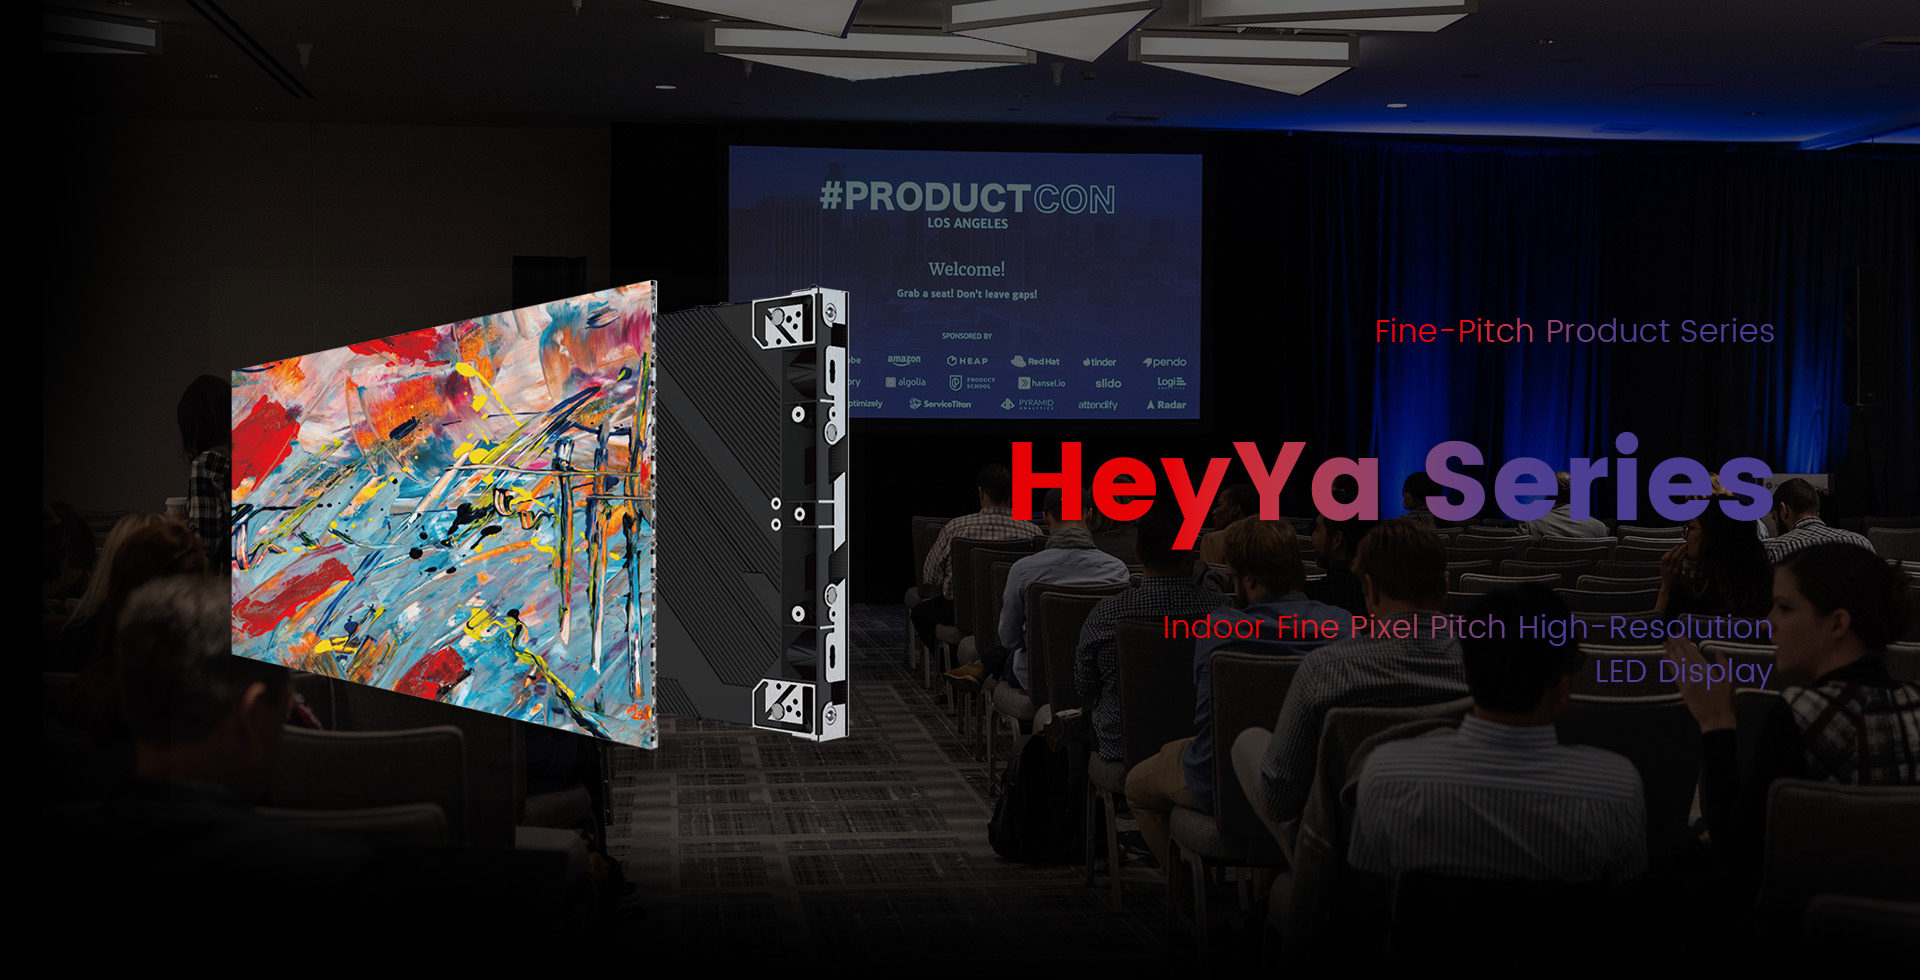 Indoor fine pixel pitch high-resolution LED display - HeyYa VMX